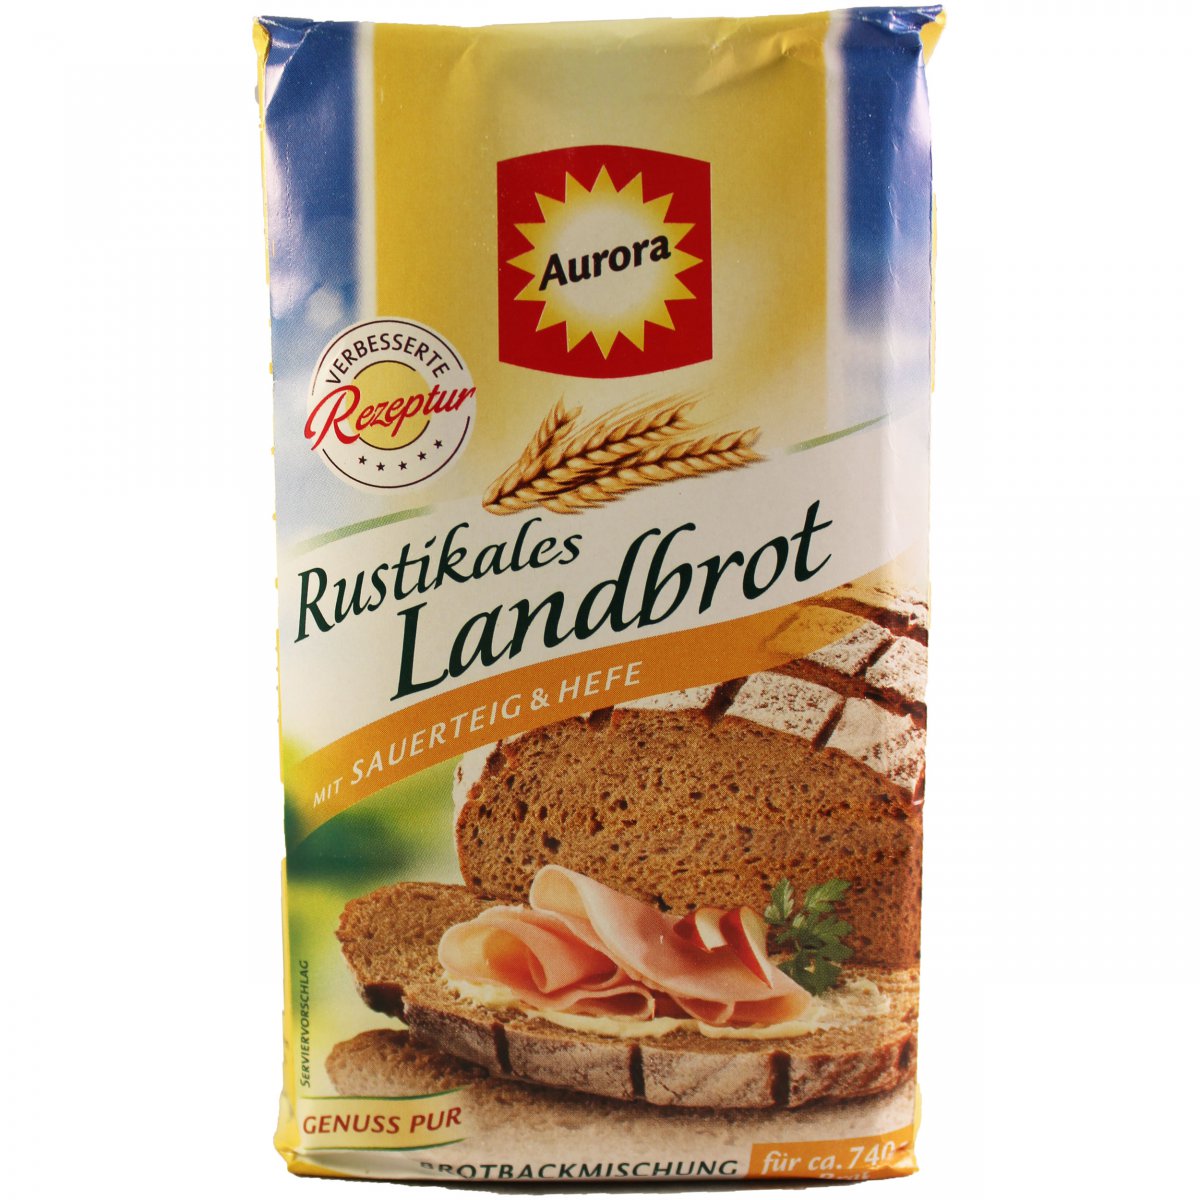 Aurora - Rustikales Landbrot (Rustic Country Bread) Bread Mix ...